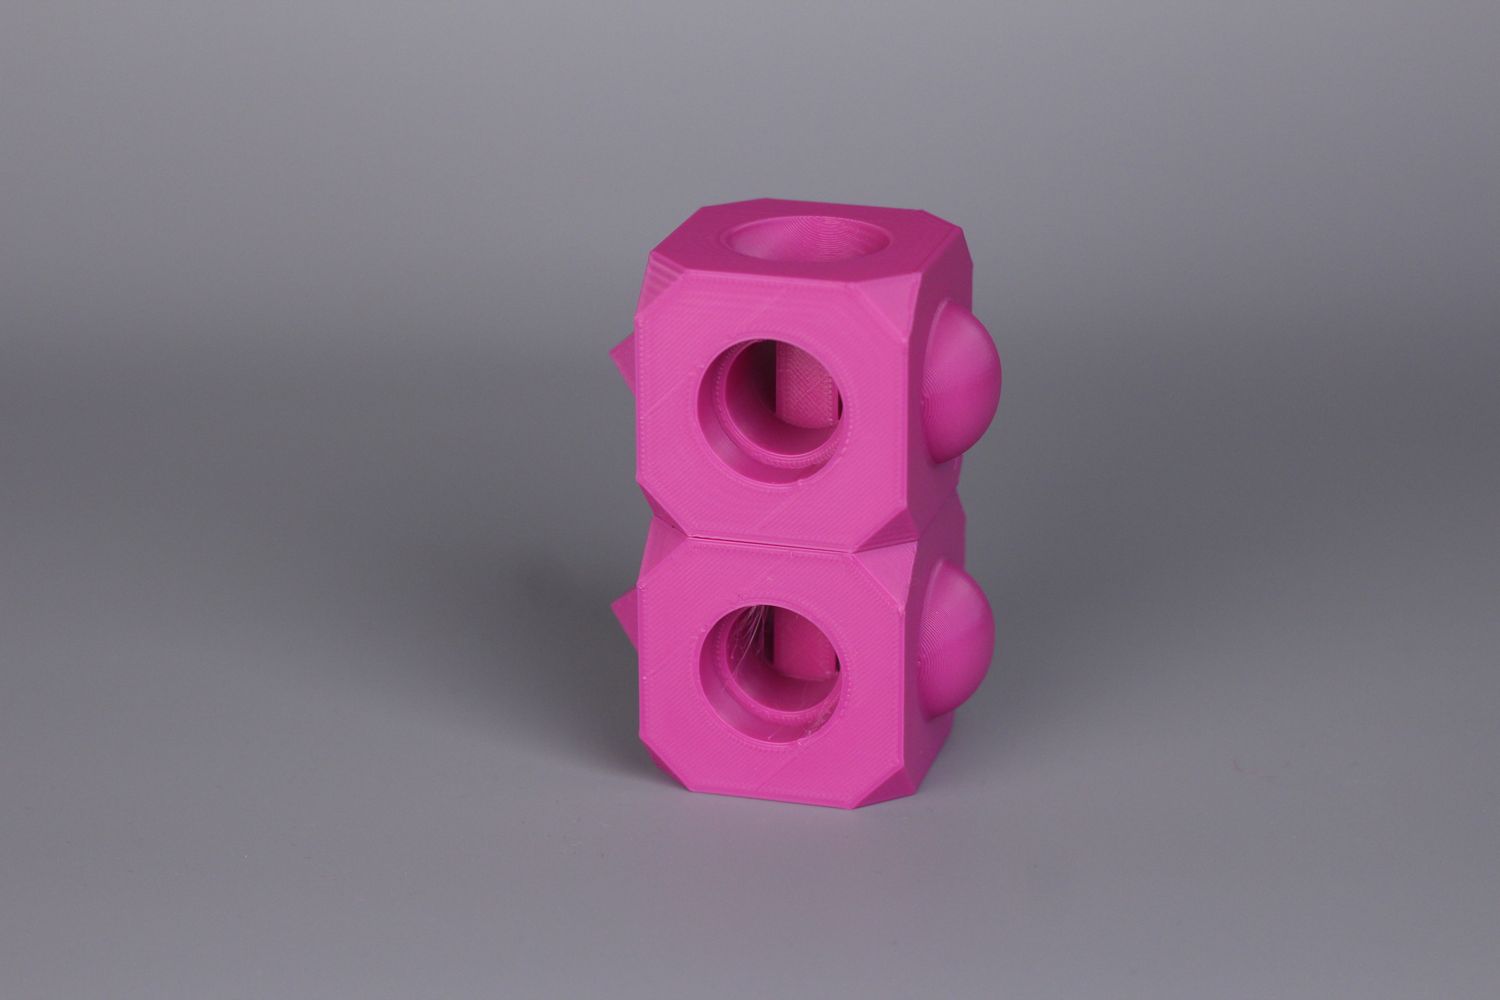 Zaribo Calibration Cube printed on BIQU Hurakan5 | BIQU Hurakan Review: Klipper Firmware on a Budget